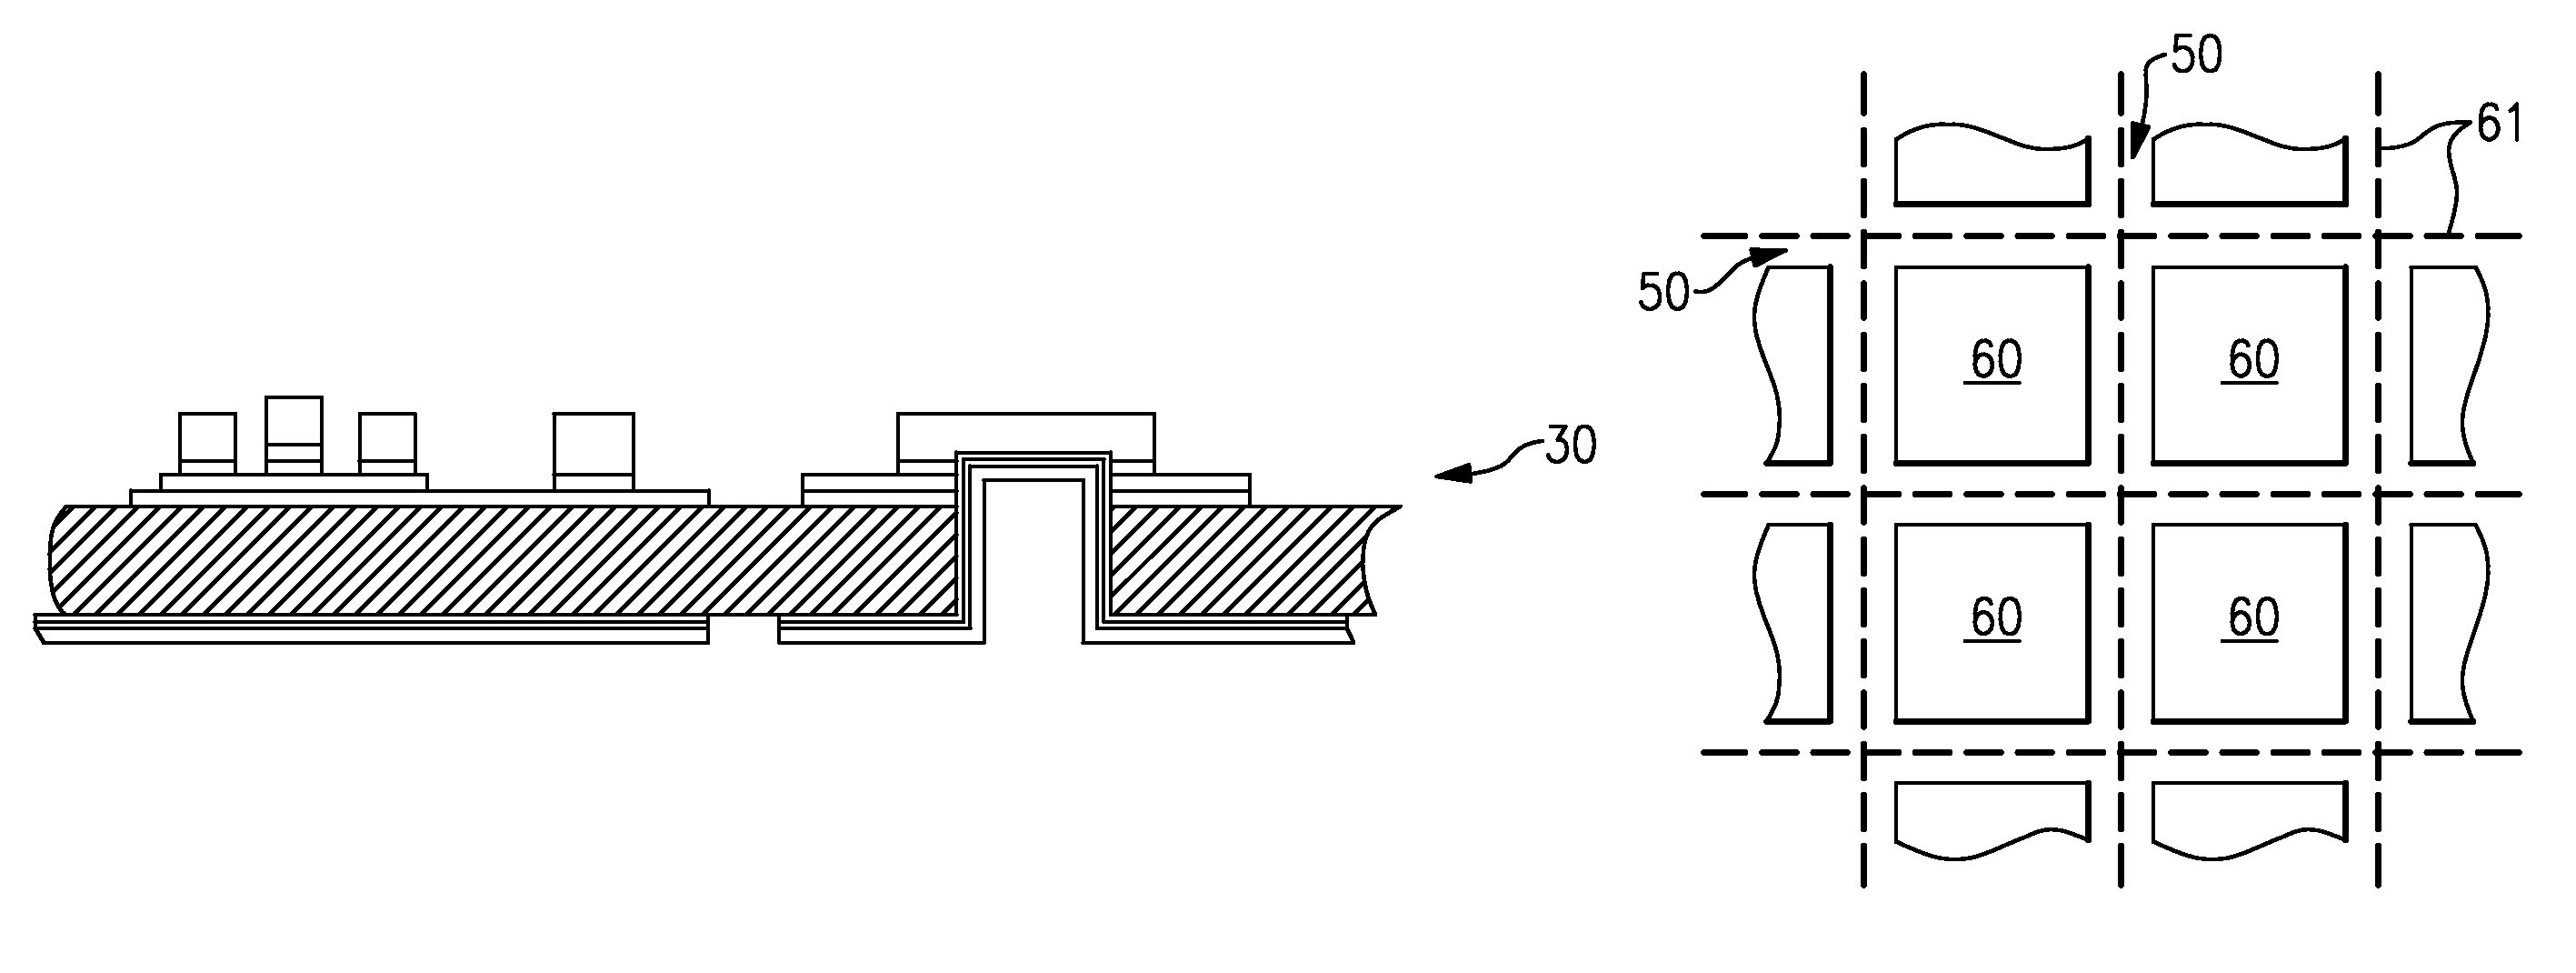 Apparatus and method for uniform metal plating